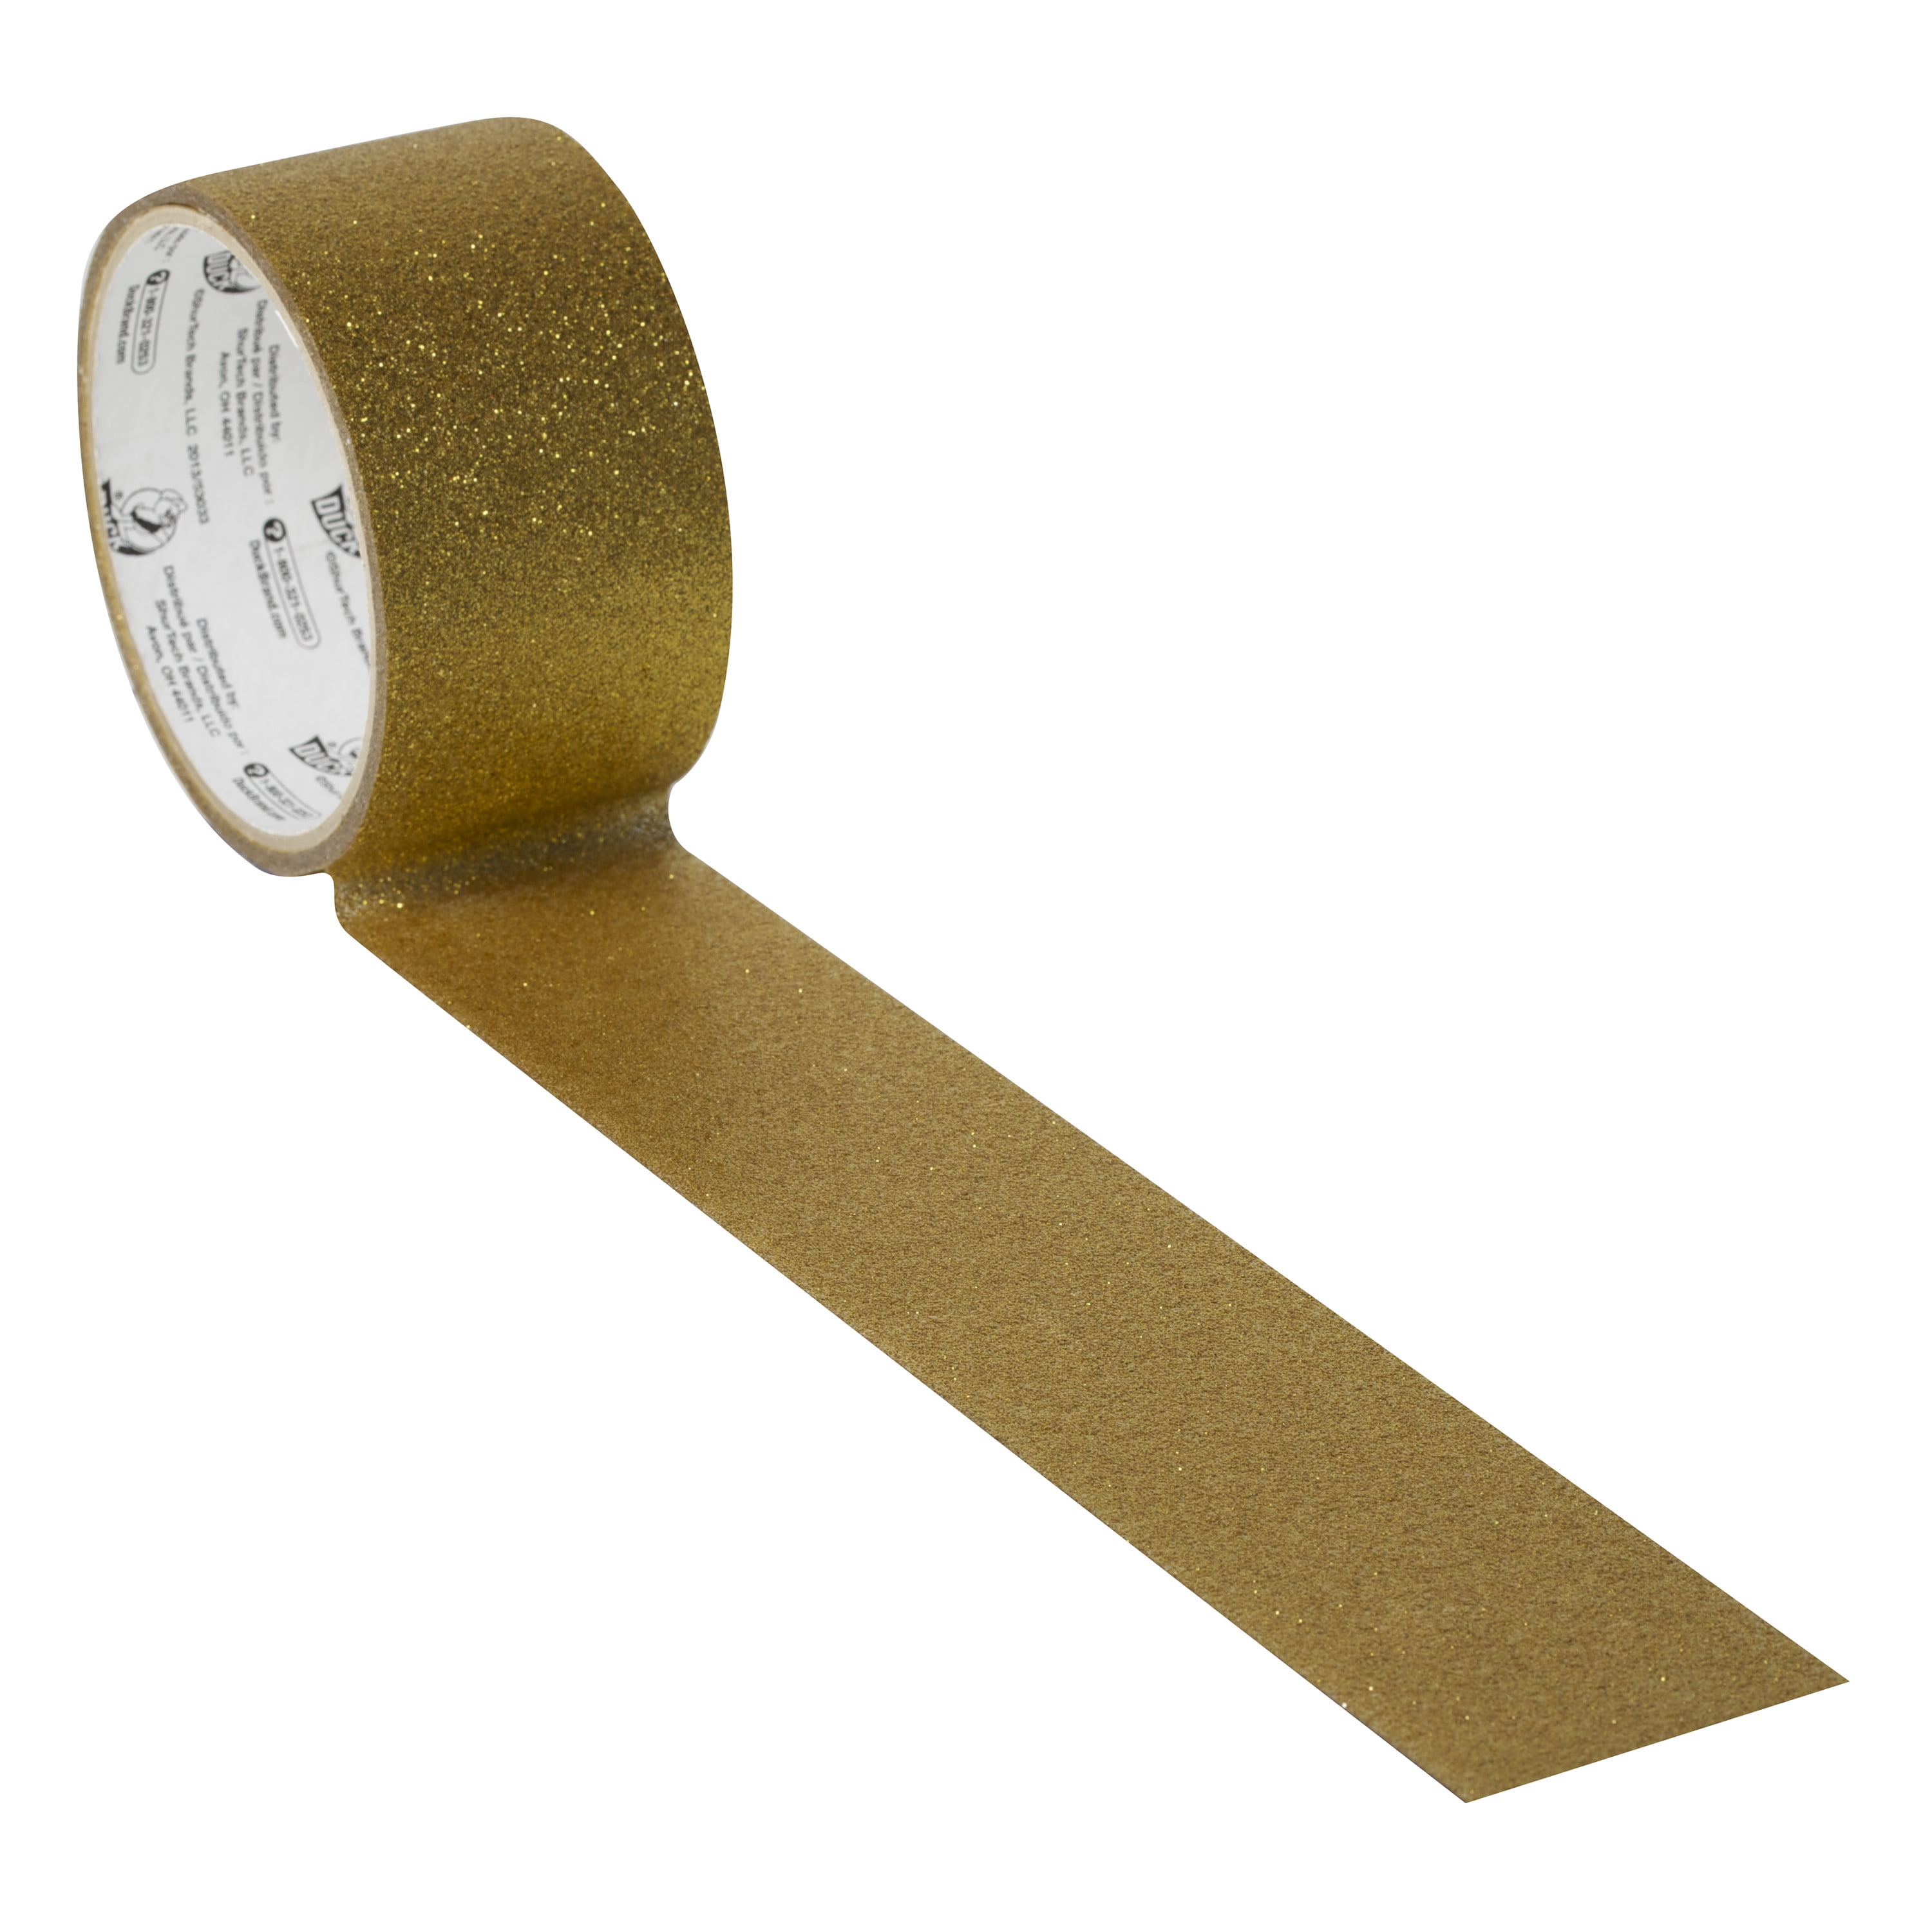 Dropship Gold Powder Glitter Tape Diy Decorative Hand Account Washi Tape  Macaron Color Line Glitter Hand Account Tape to Sell Online at a Lower  Price